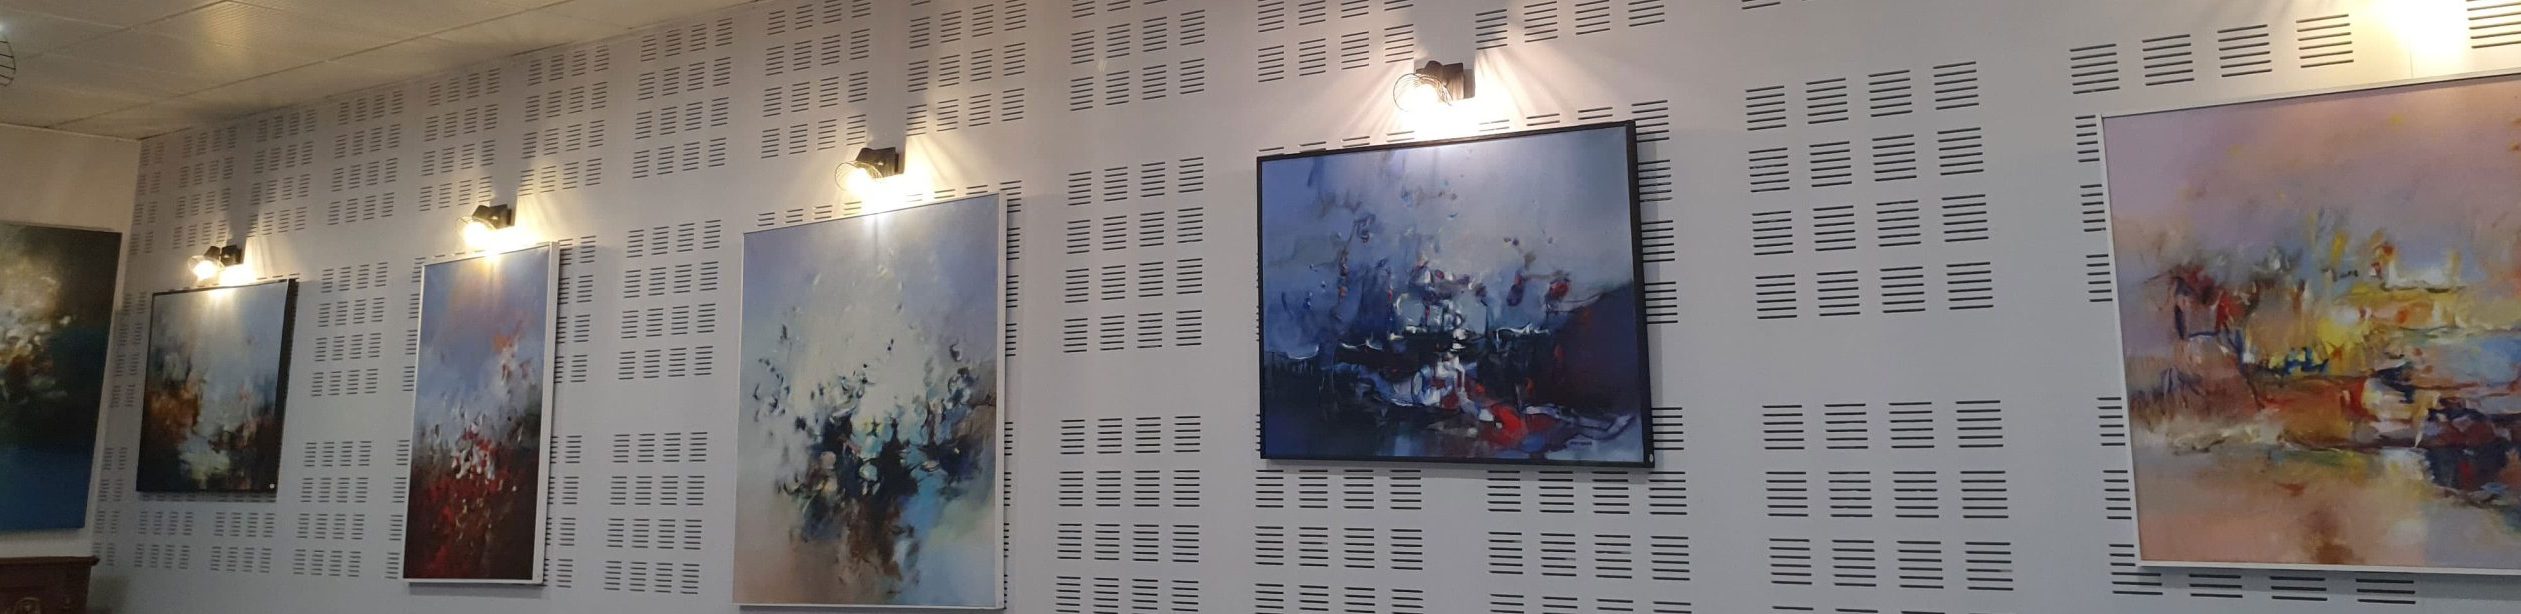 Exposición de pinturas de Lartigaud